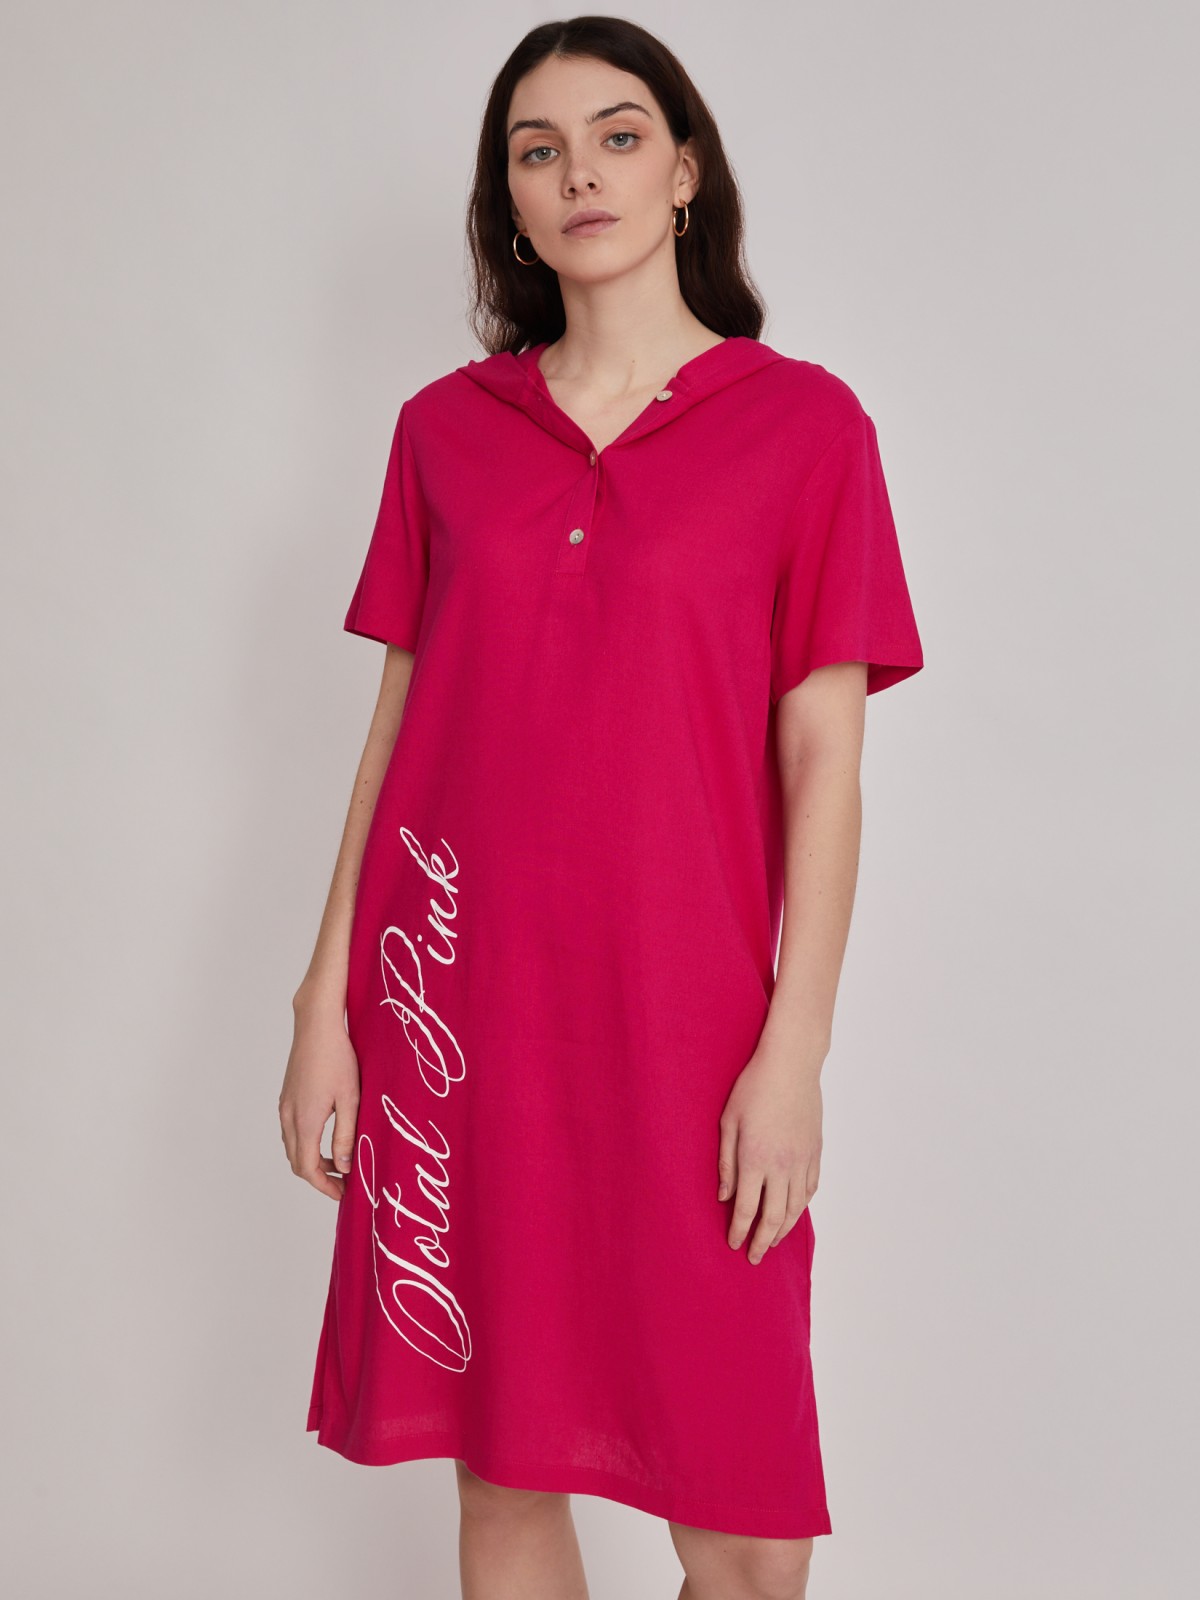 Платье-футболка из льна с капюшоном zolla 223238262101, цвет фуксия, размер XS - фото 4